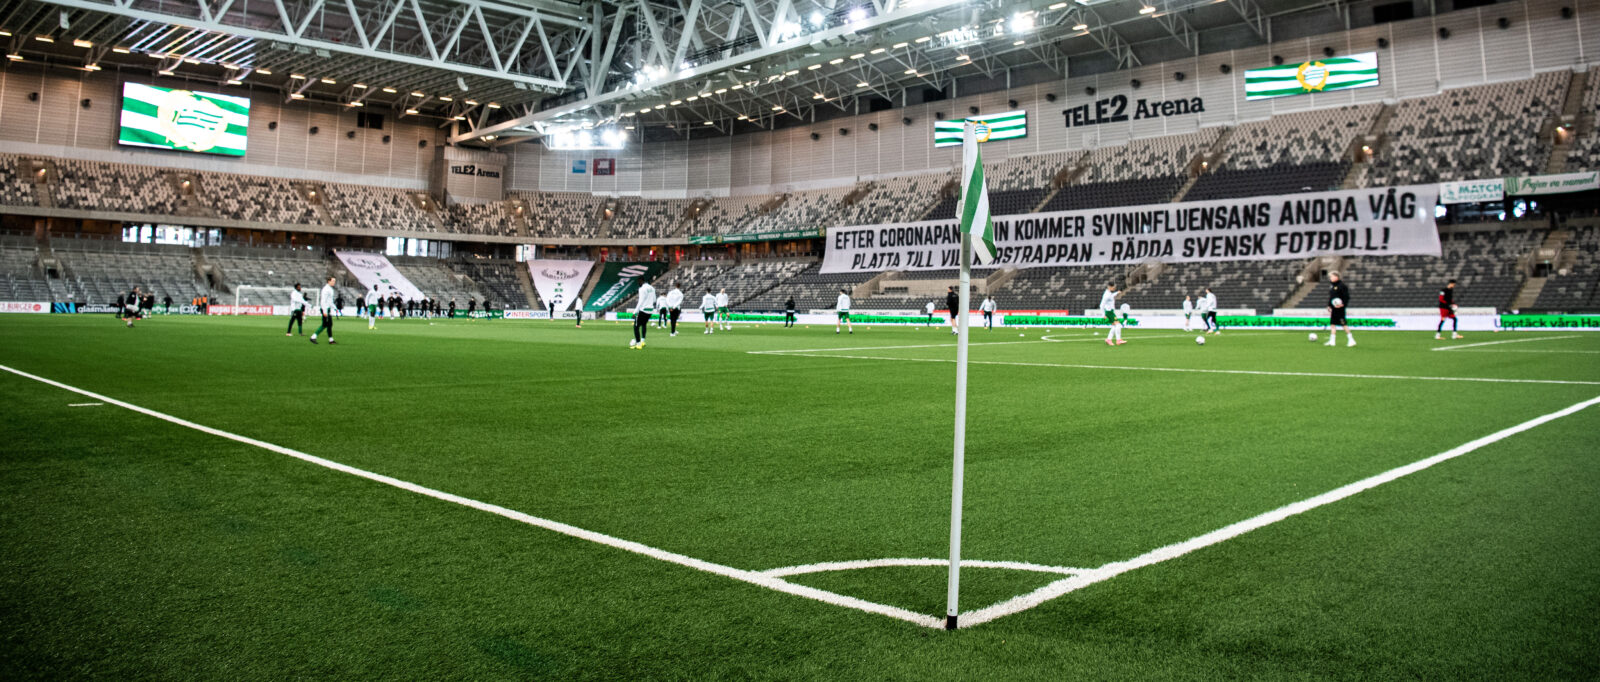 Söndag 7 mars 2021, kl 13:00  Hammarby IF - AIK 3-2 (0-1)  Tele2 Arena, Stockholm